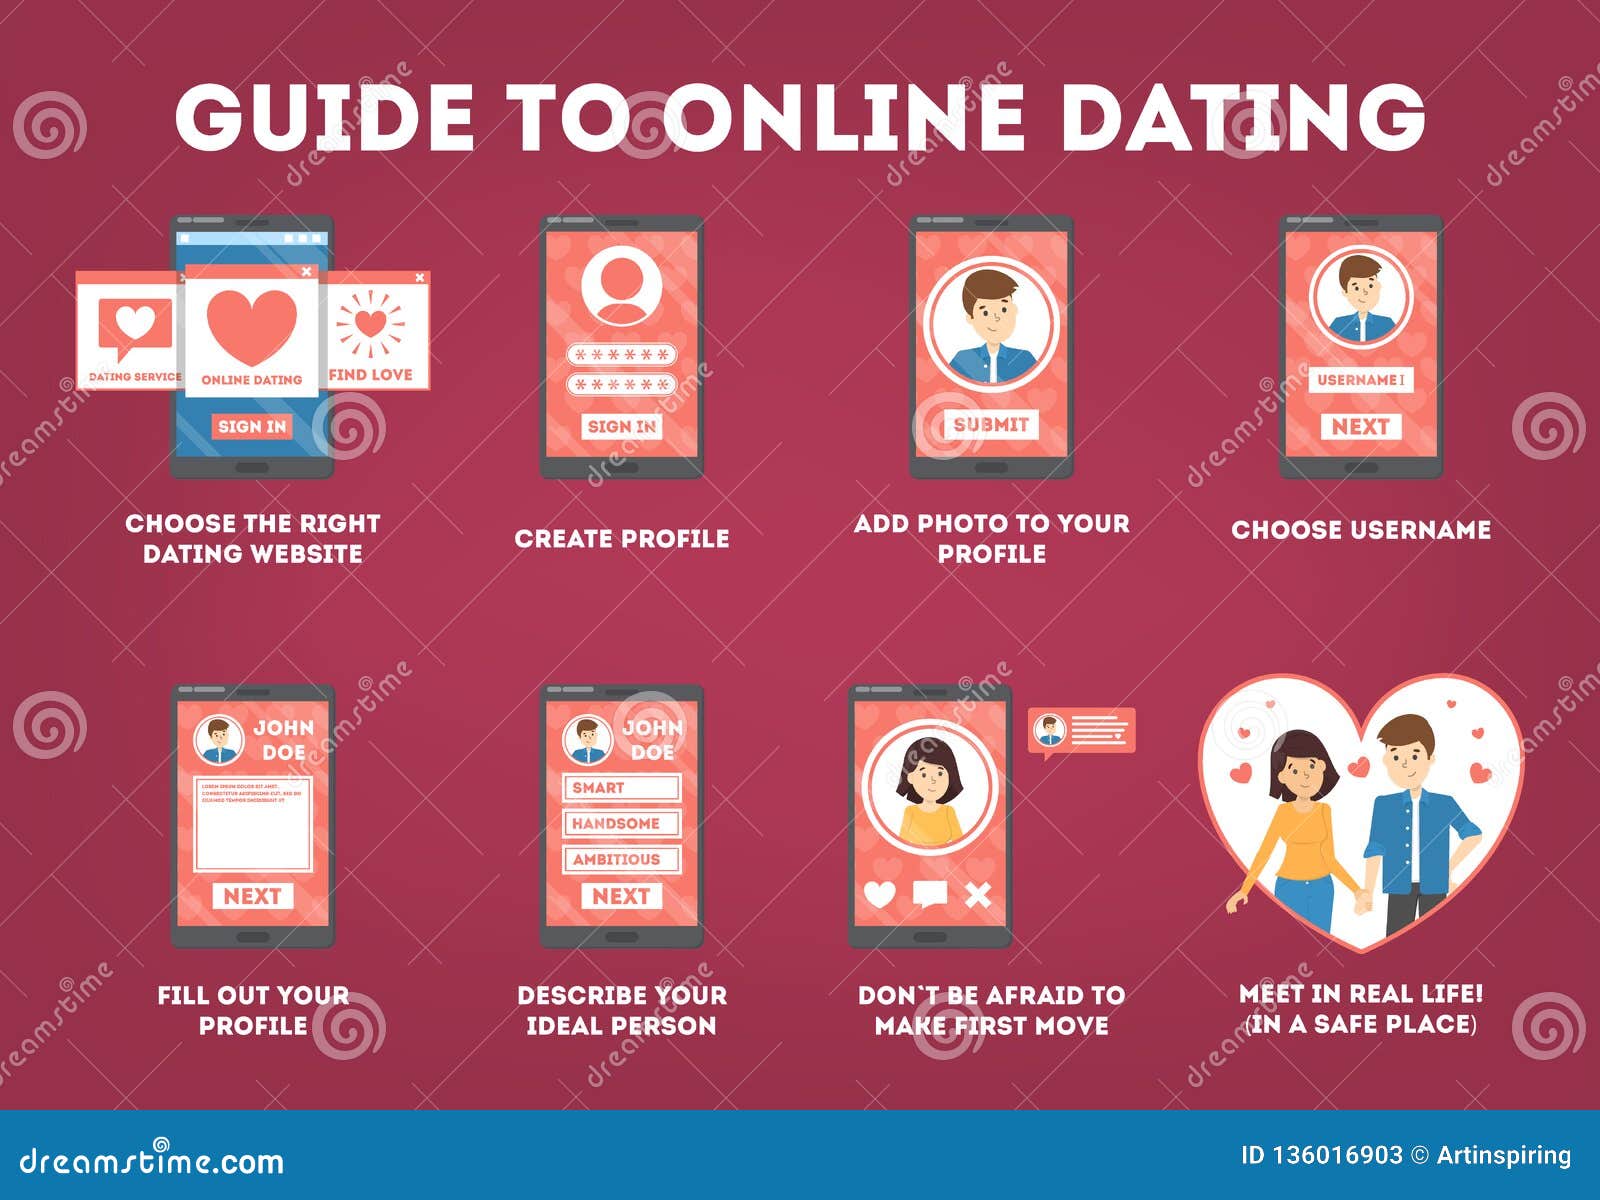 QuackQuack — 100% Free Online Dating Site to Meet Singles!